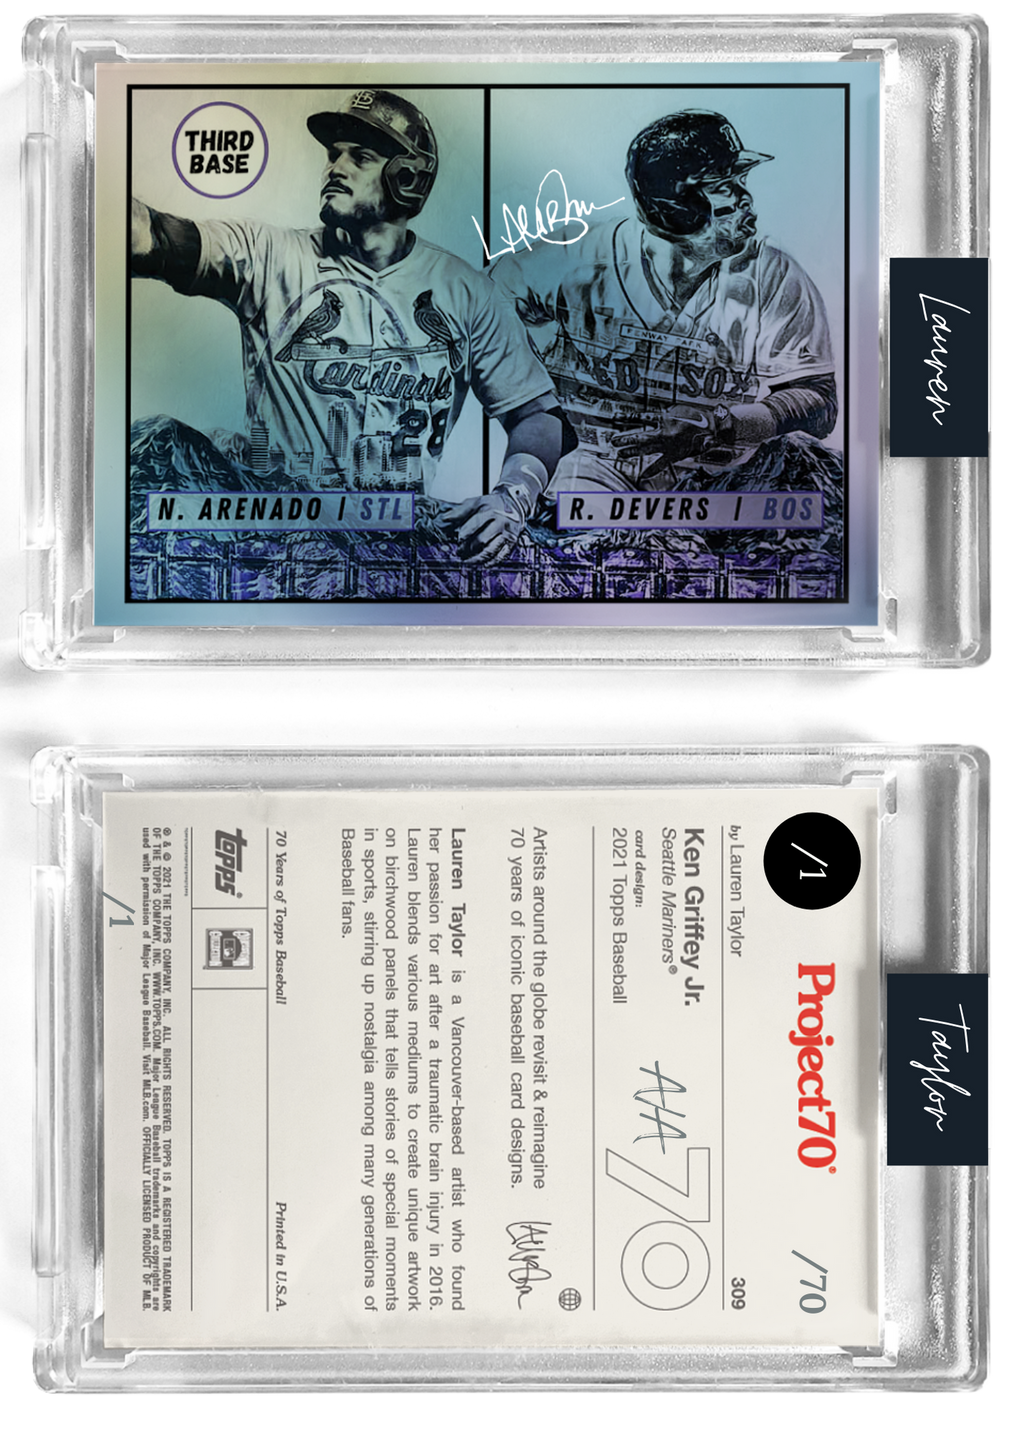 1/1 Metallic Chrome Artist Signature - Devers/Arenado - Foil Variant 130pt Card #ASG09 by Lauren Taylor - Baseball Card